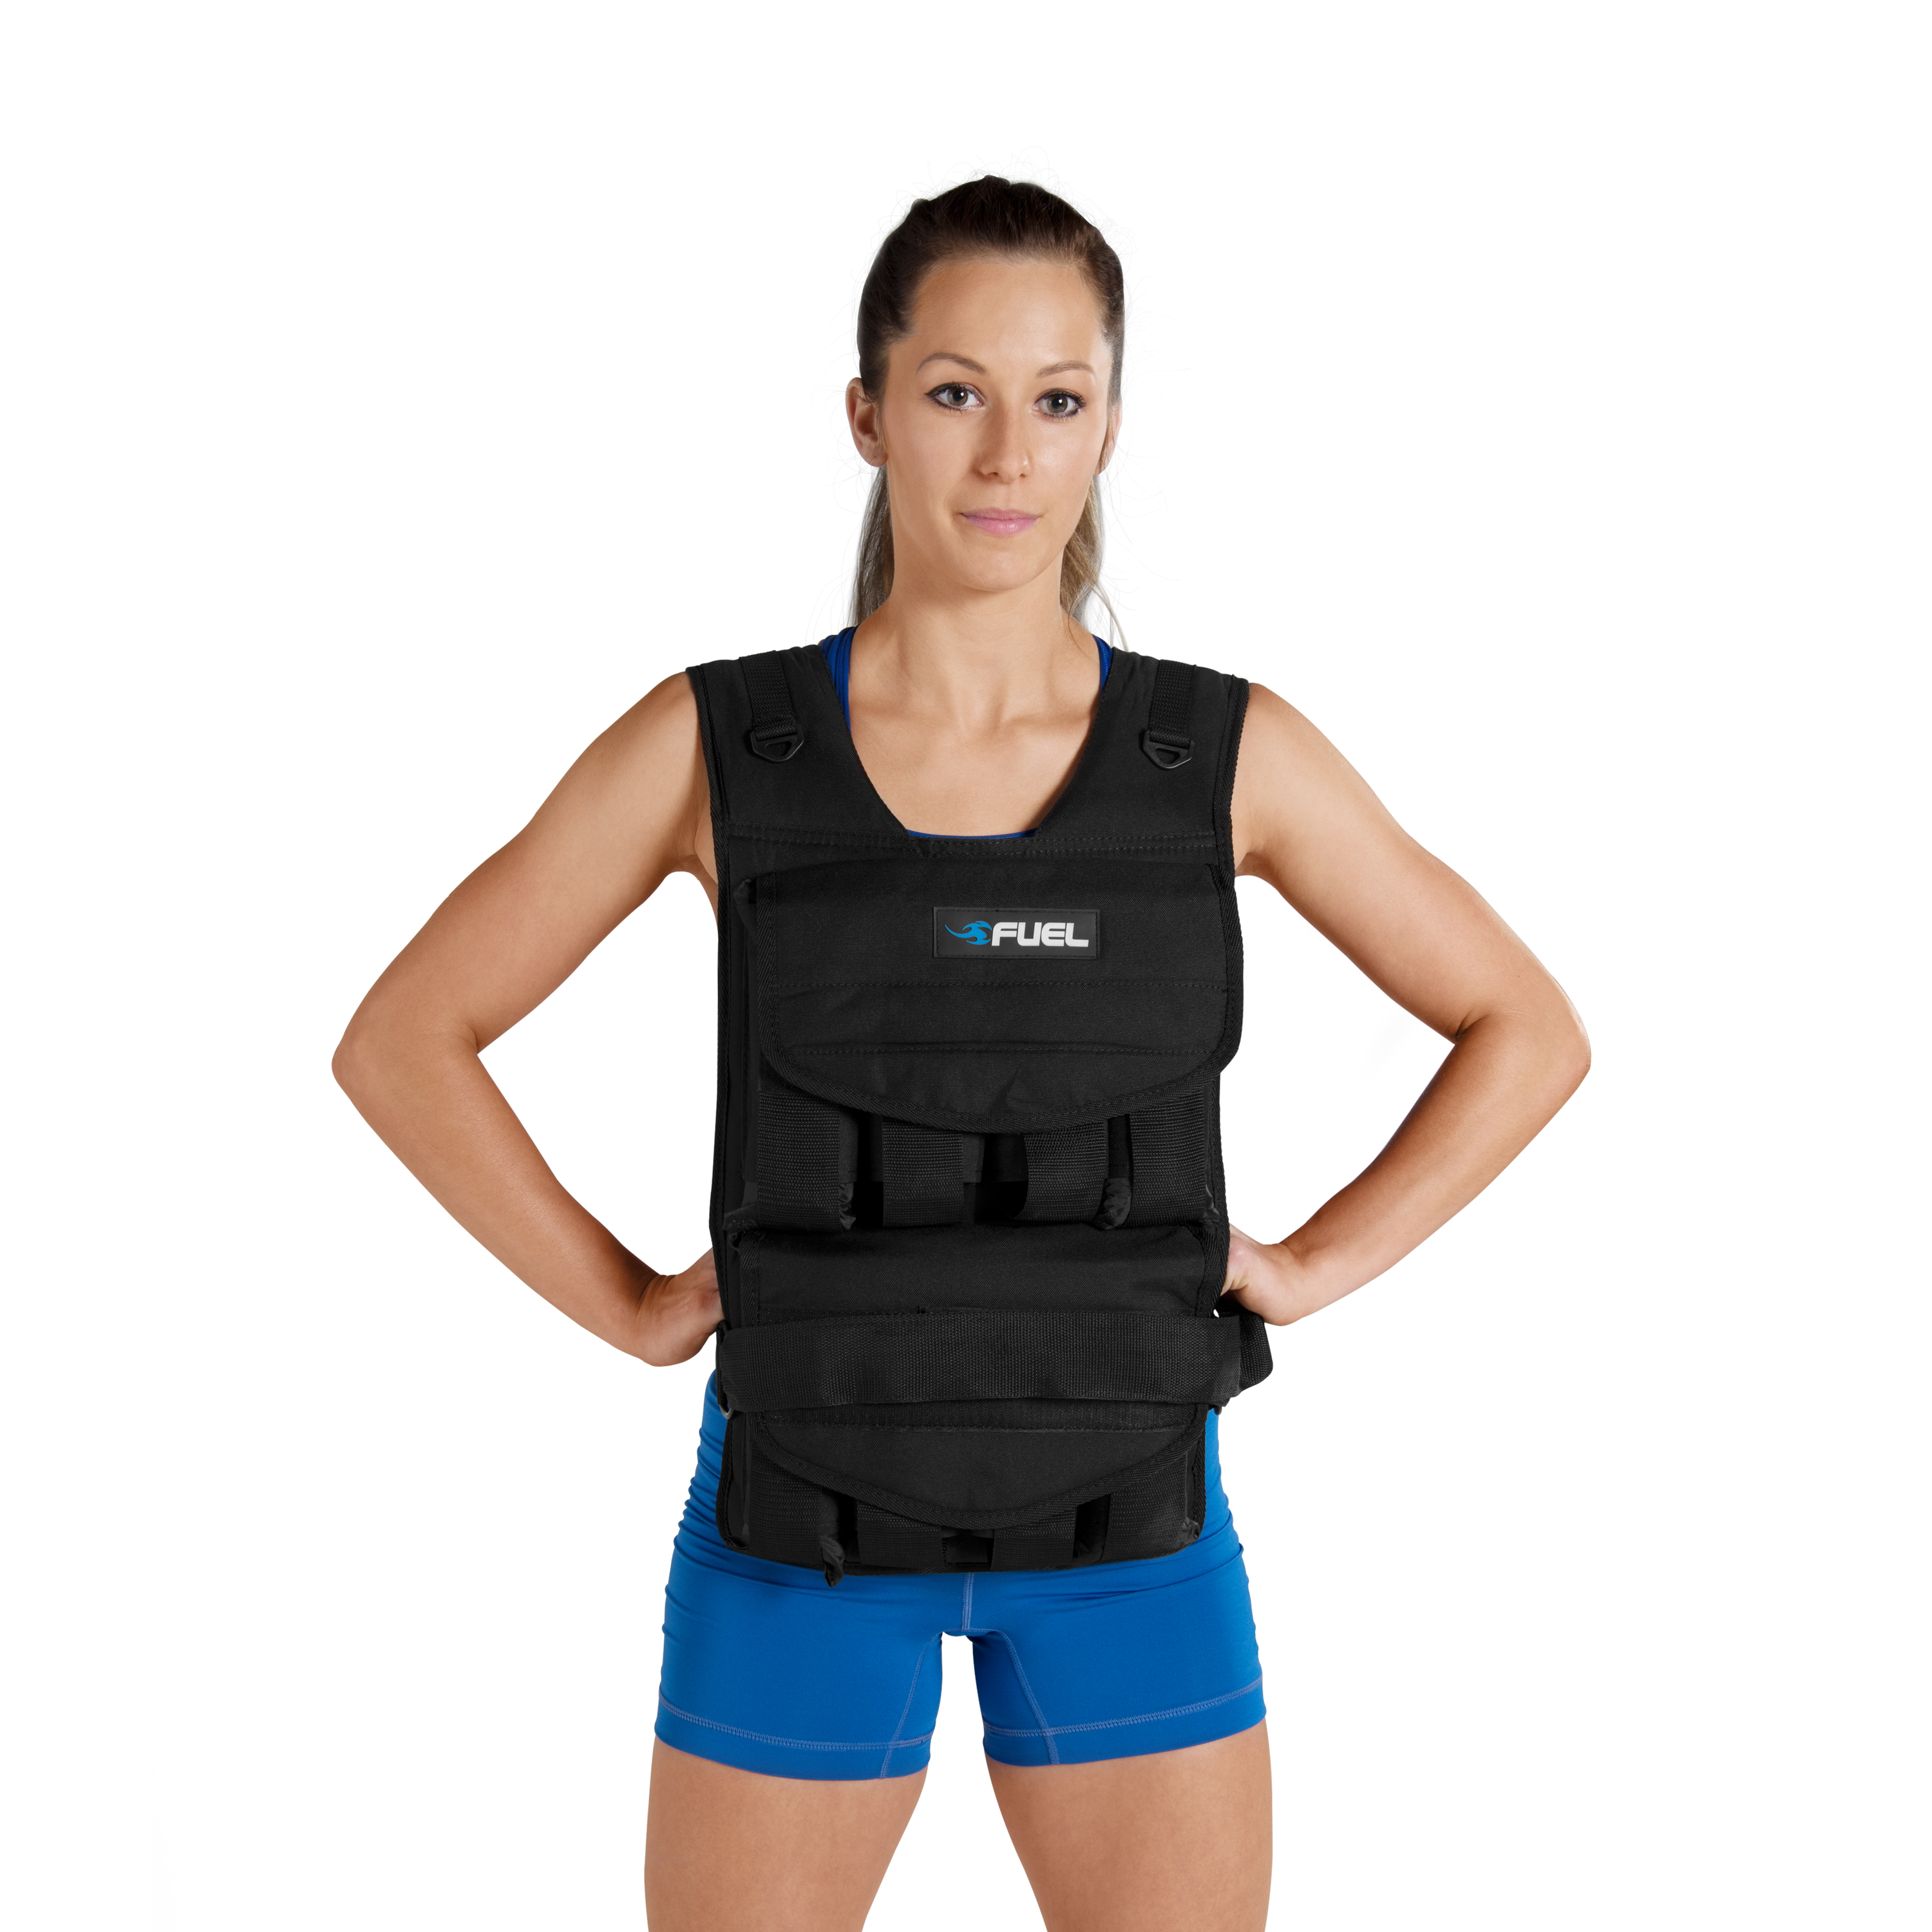 Fuel Pureformance Adjustable Weighted Fitness Vest, 40 Lb. - Walmart.com